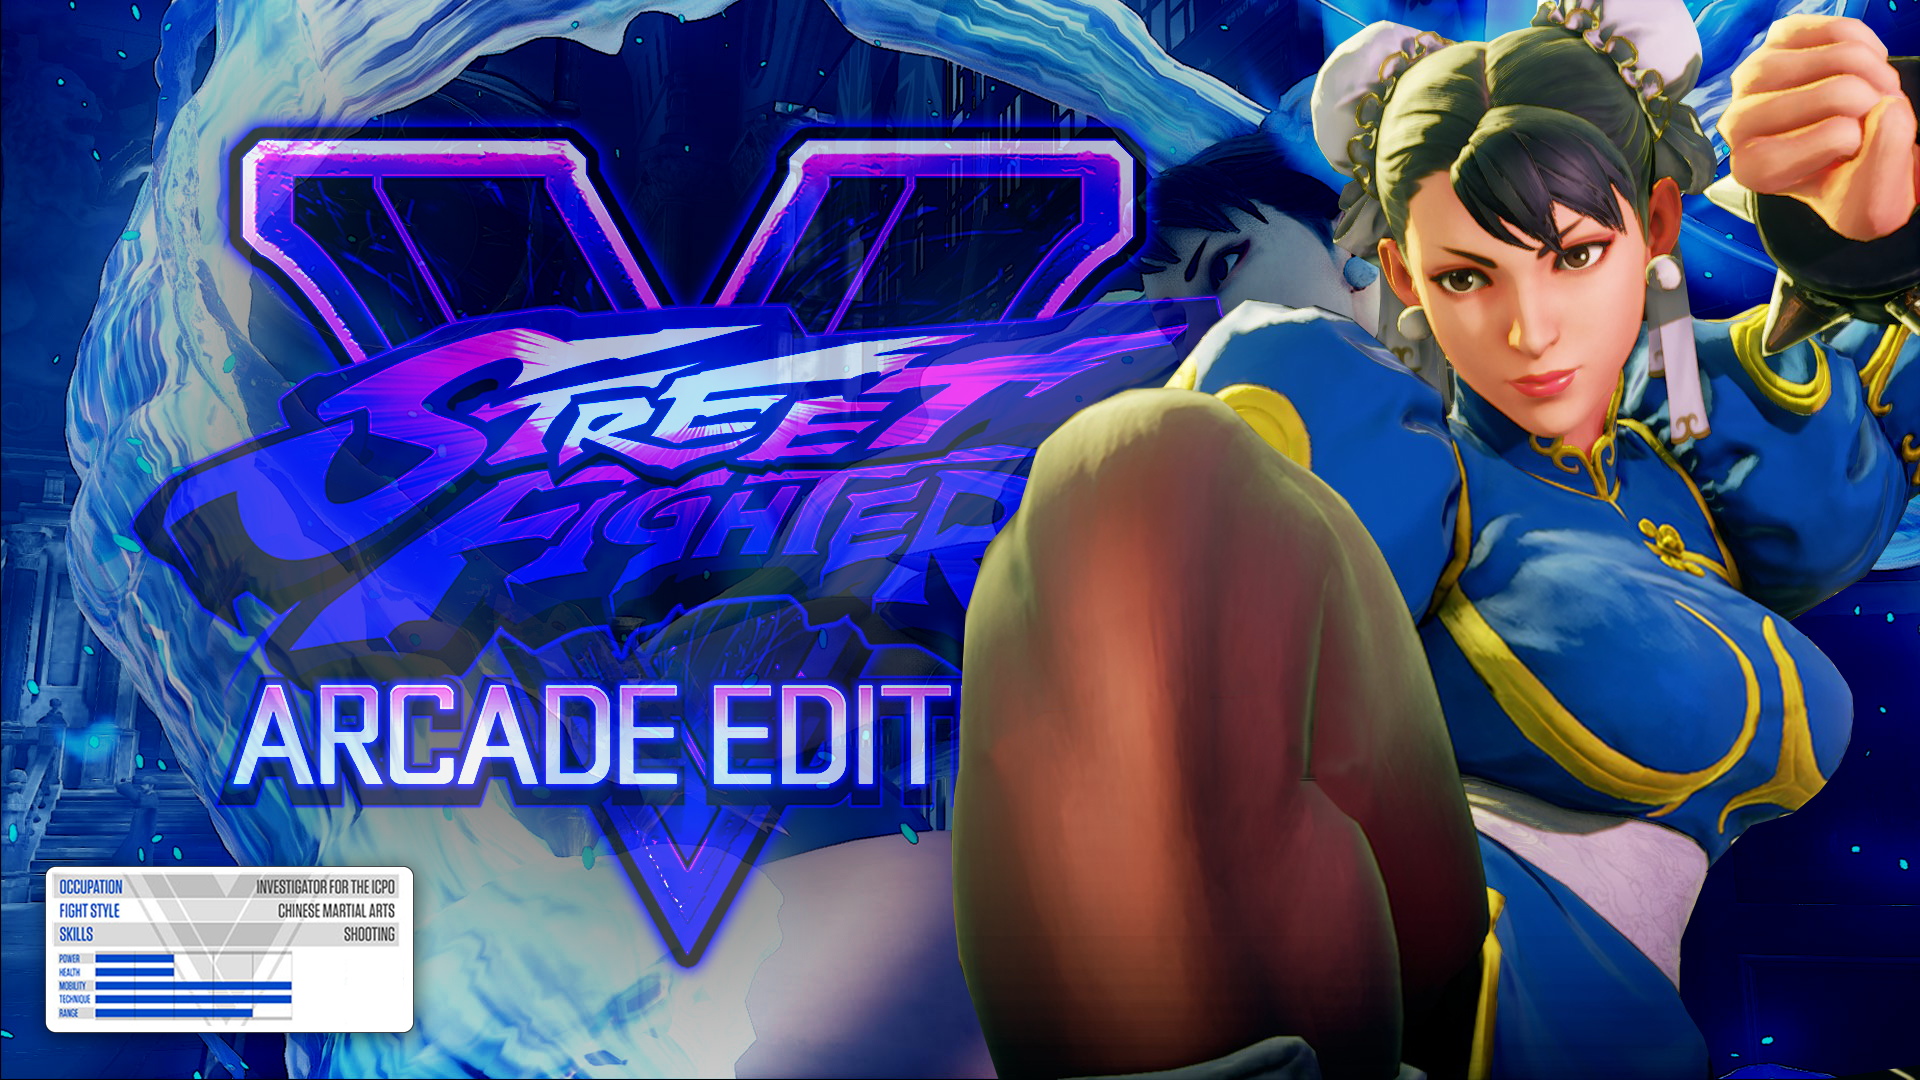 chun li (street fighter), video game, street fighter v, street fighter